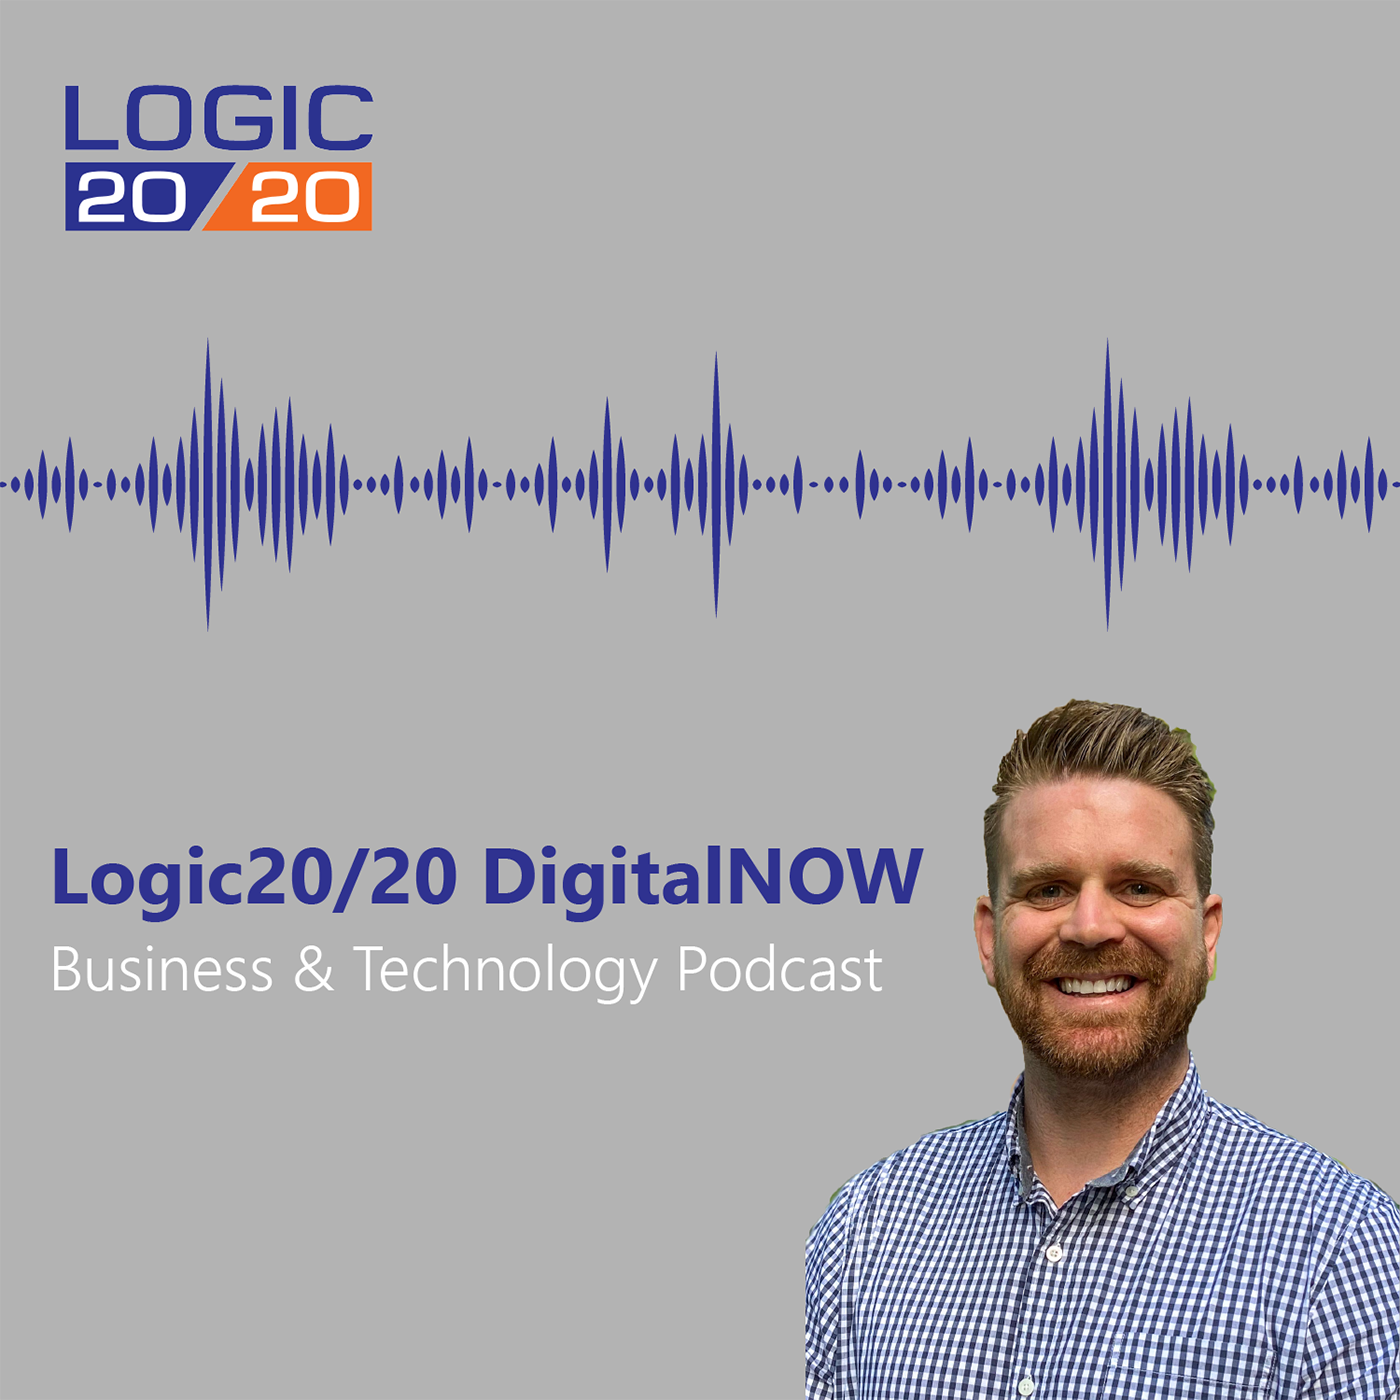 Logic20/20's DigitalNOW